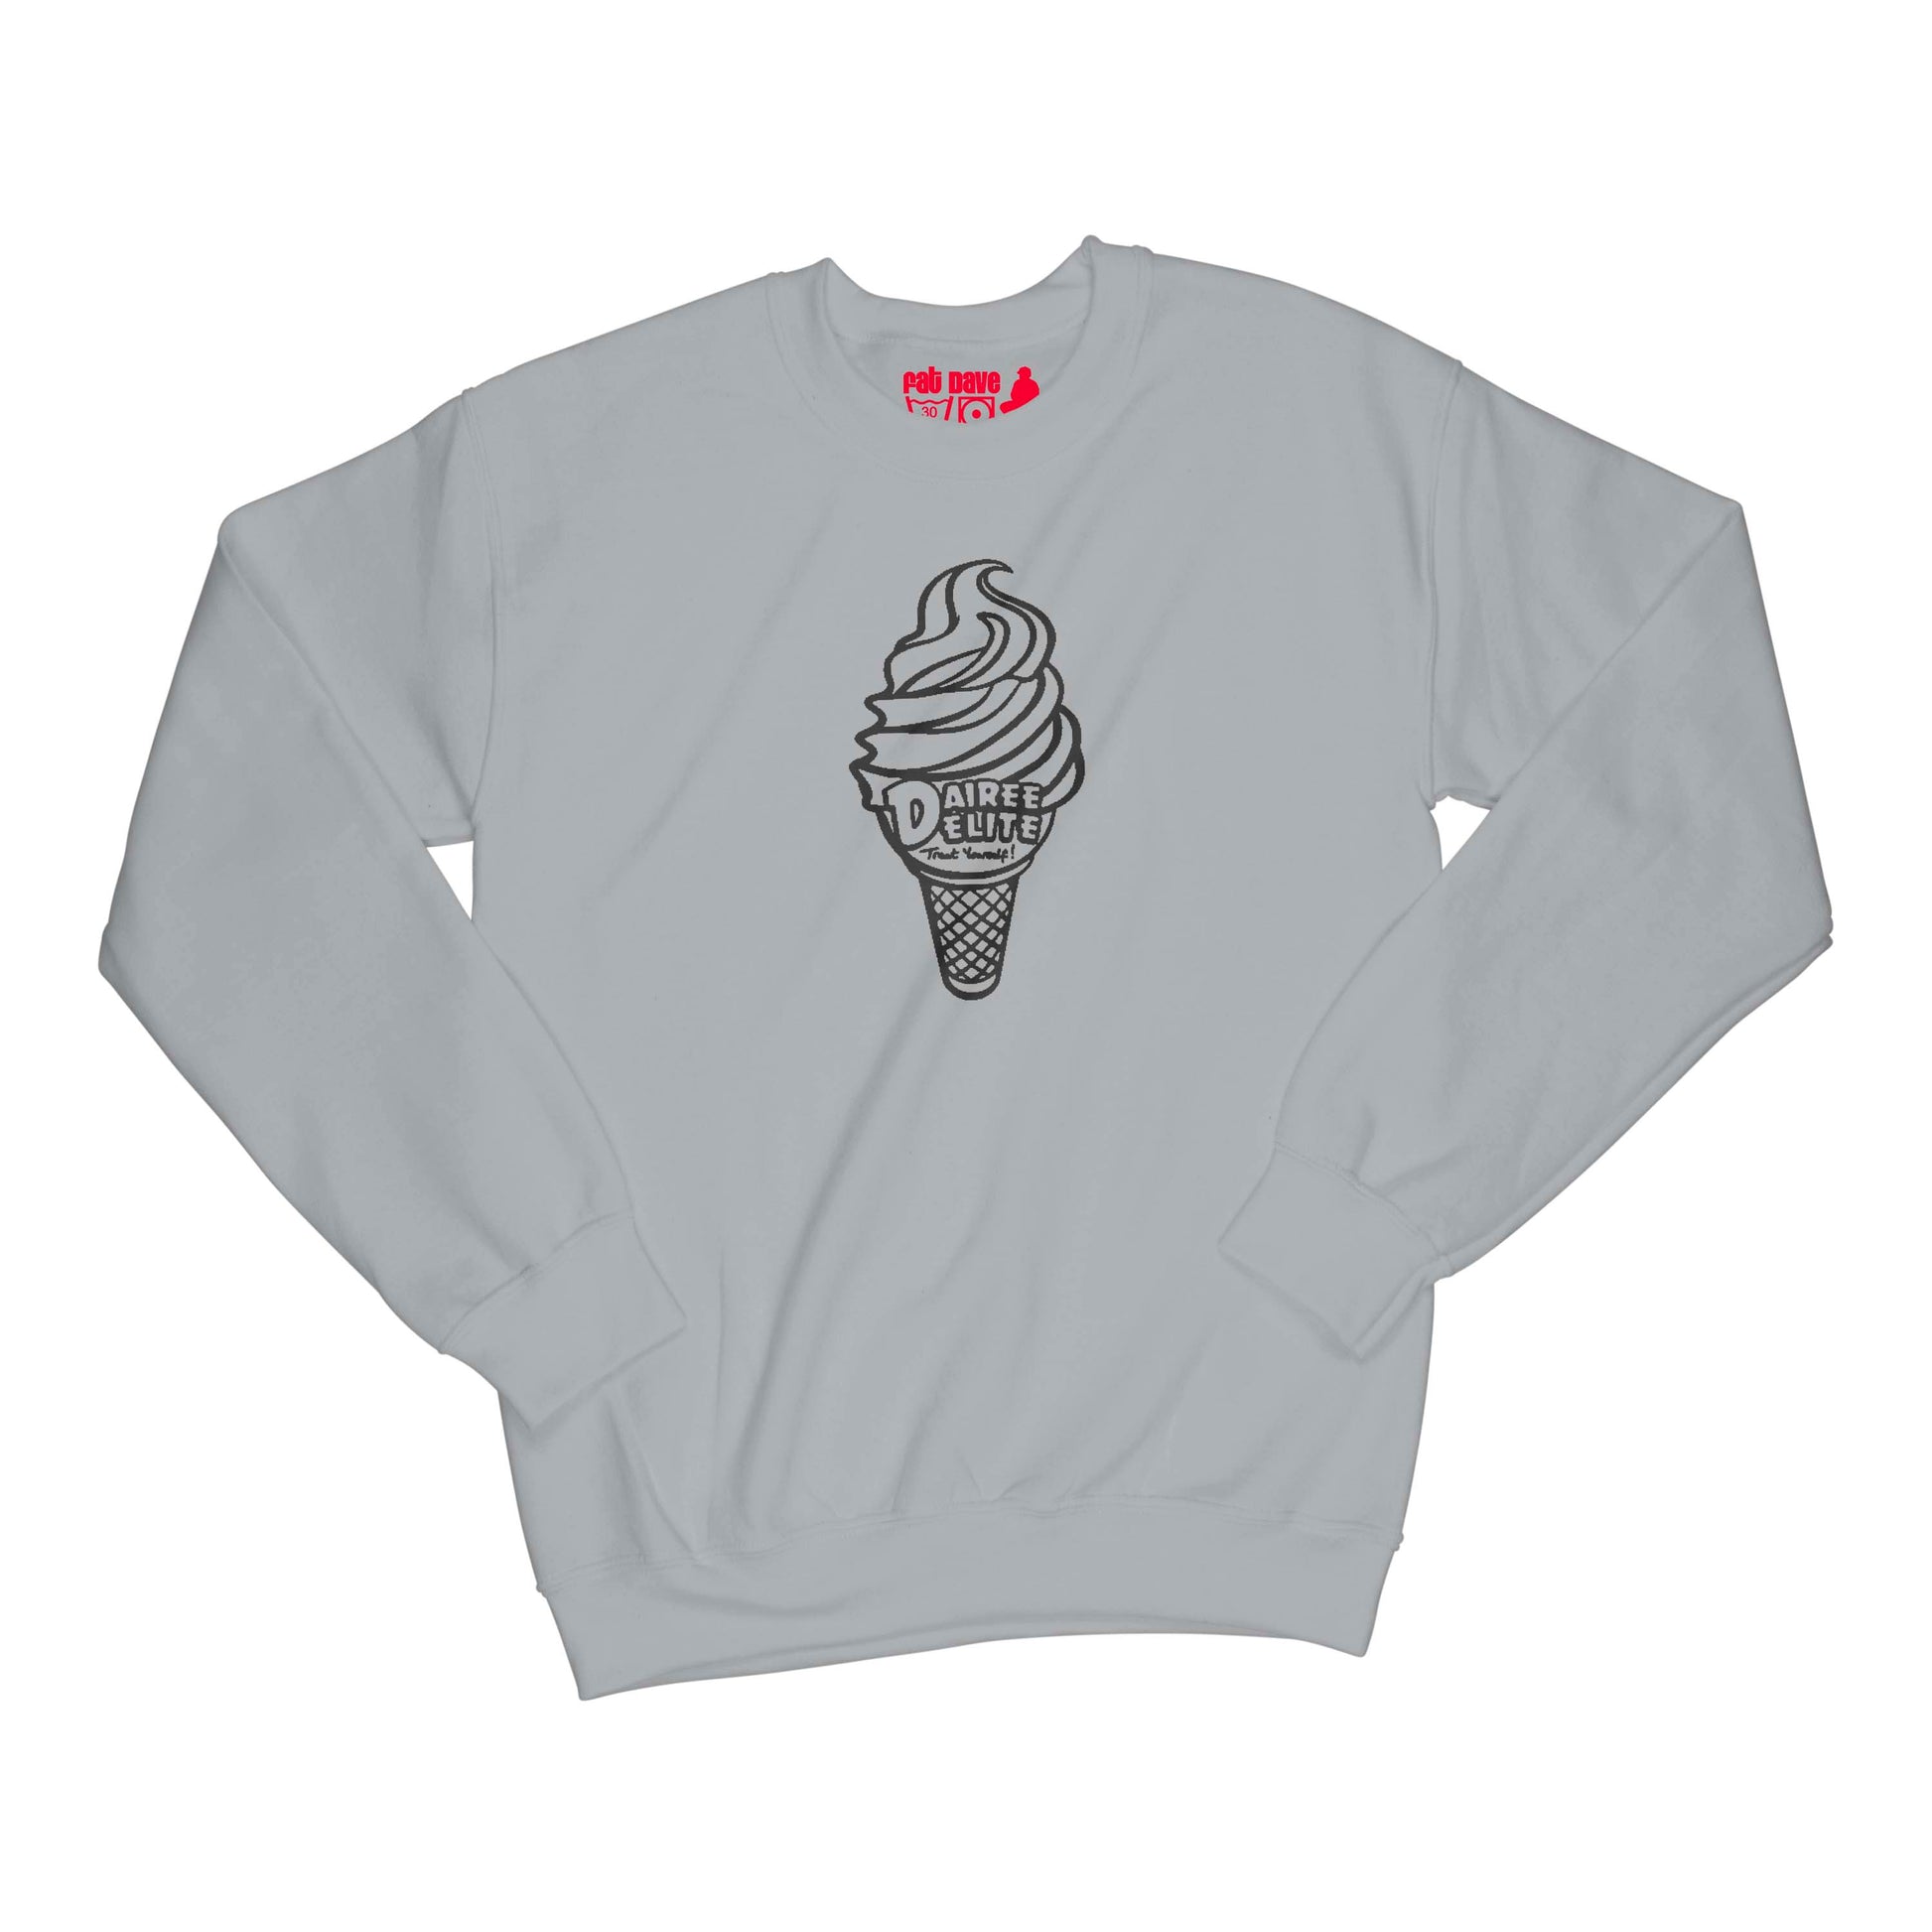 Dairee Delite 70th Anniversary Treat Yourself Cone Sweatshirt Small Sport Grey